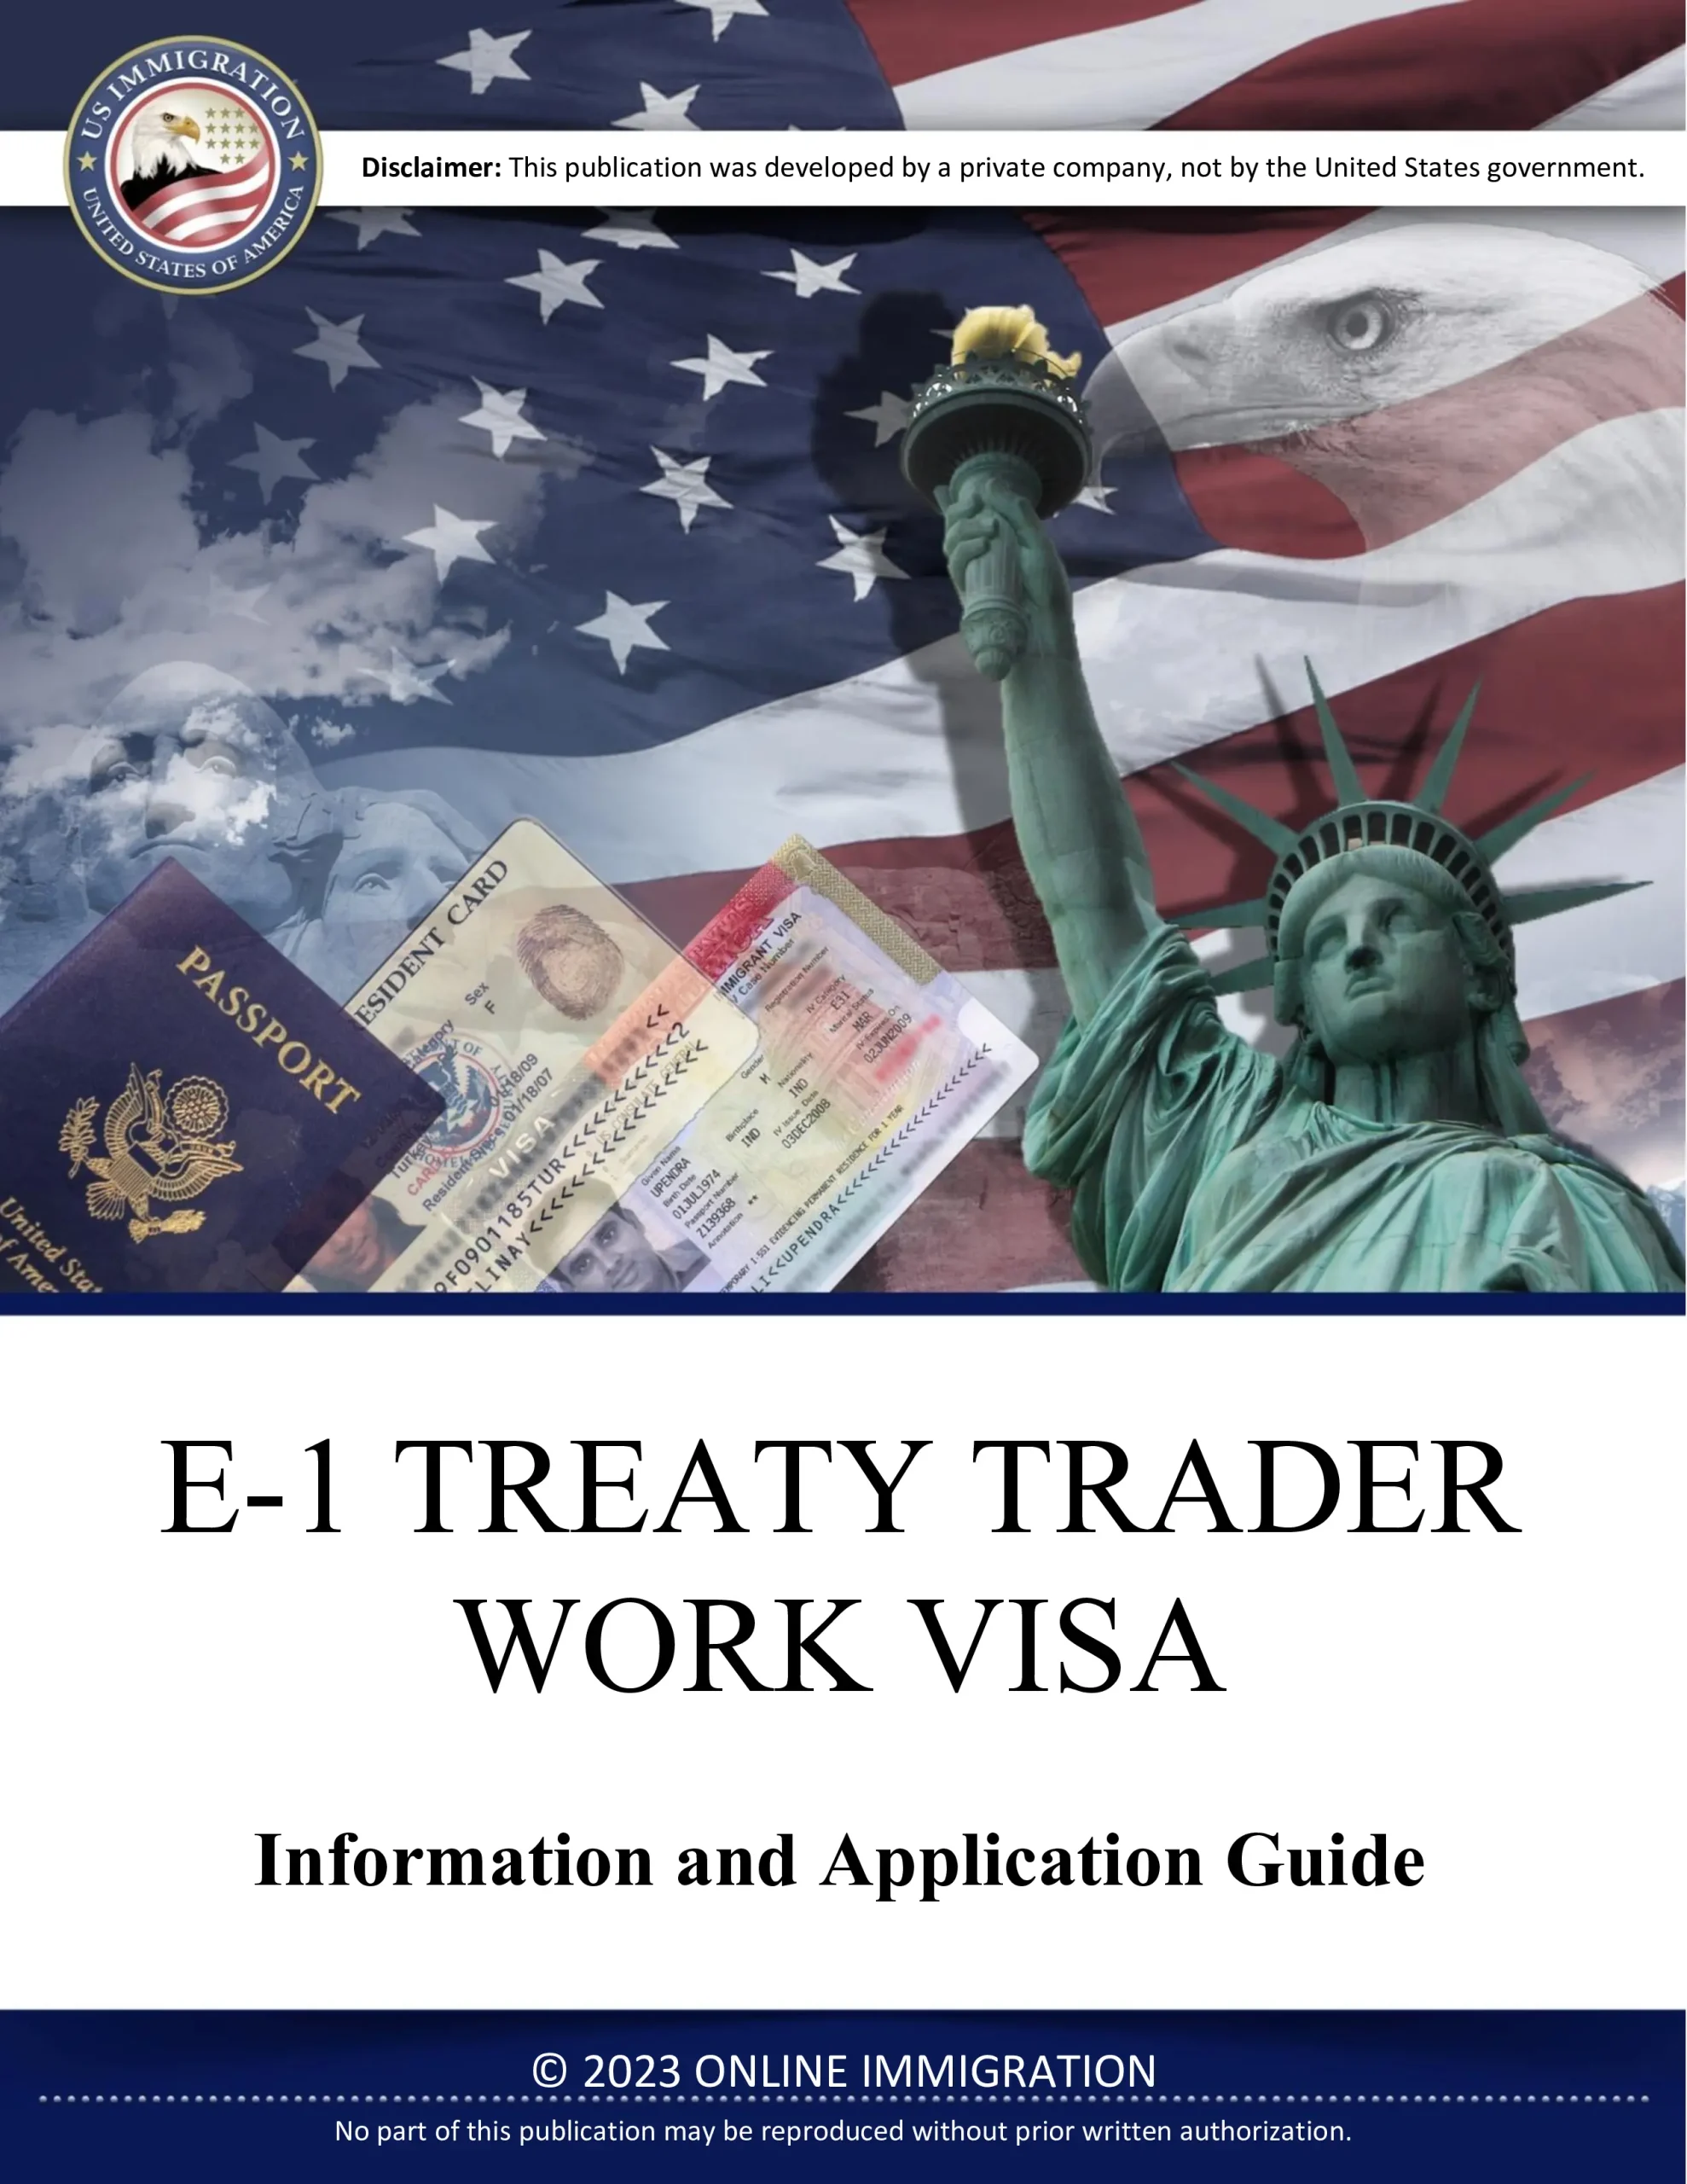 E-1 Treaty Trader Work Visa Application Guide